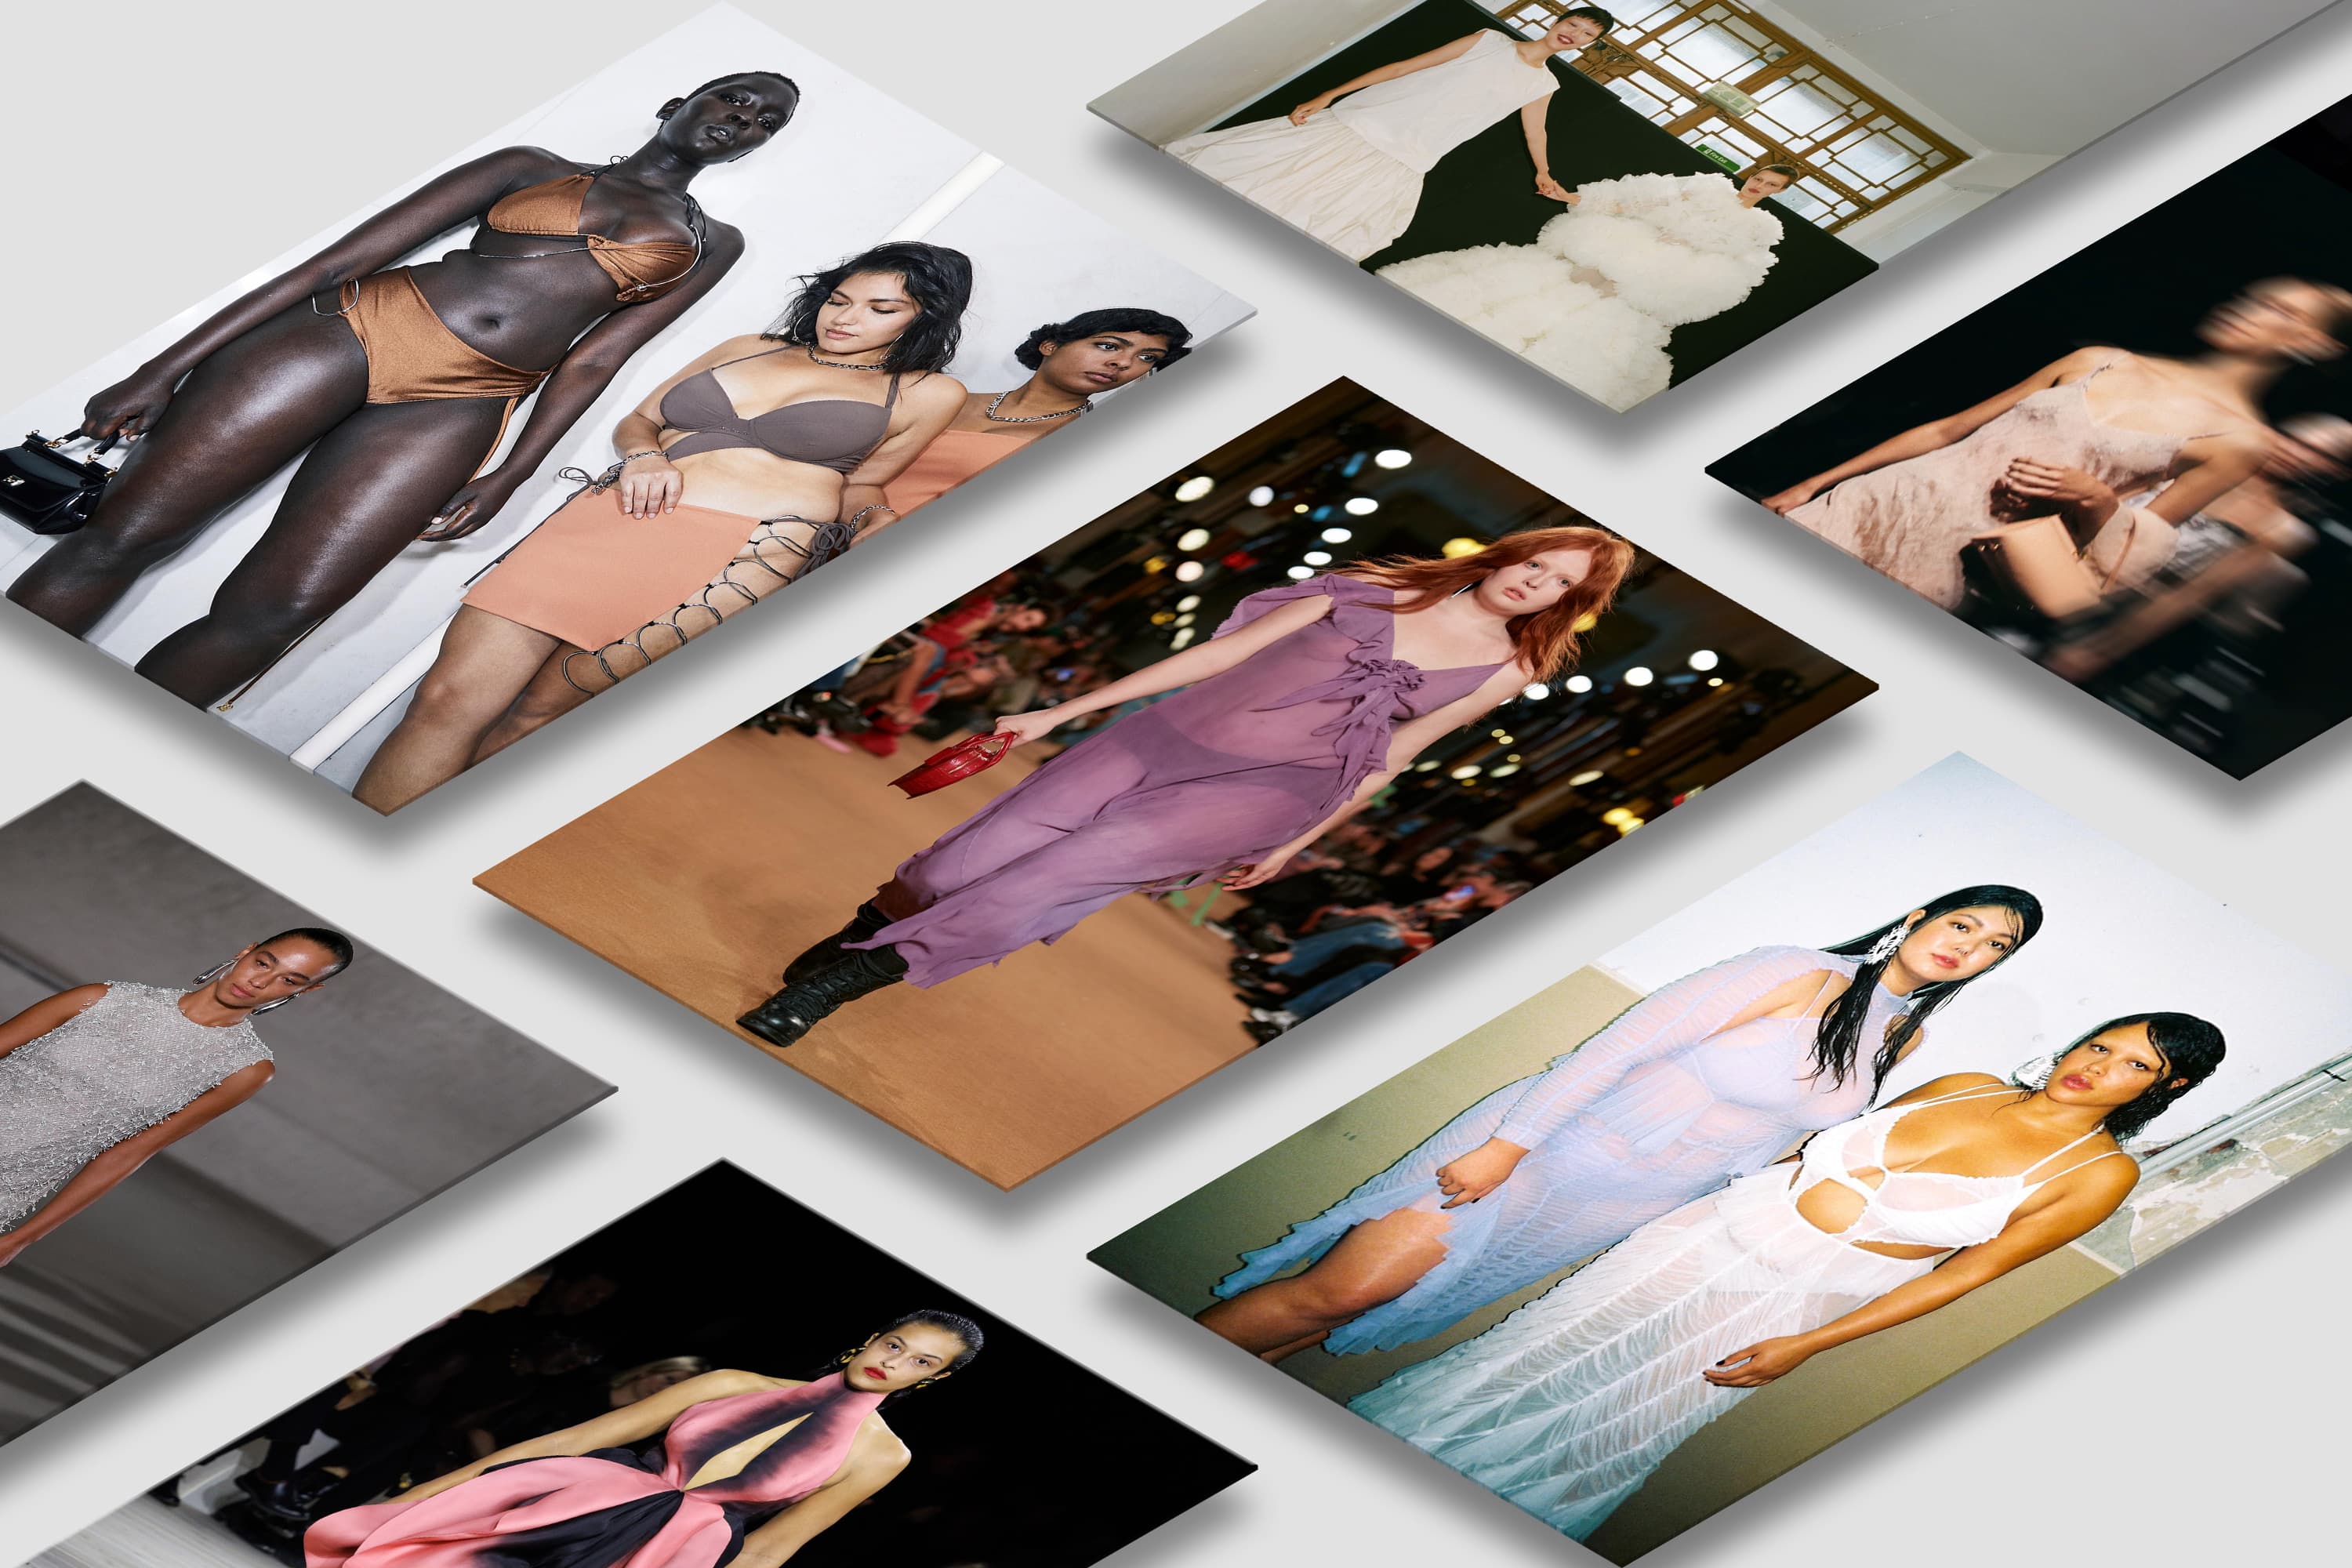 The Secret World of “Fit Models,” The Men Behind the Mannequins